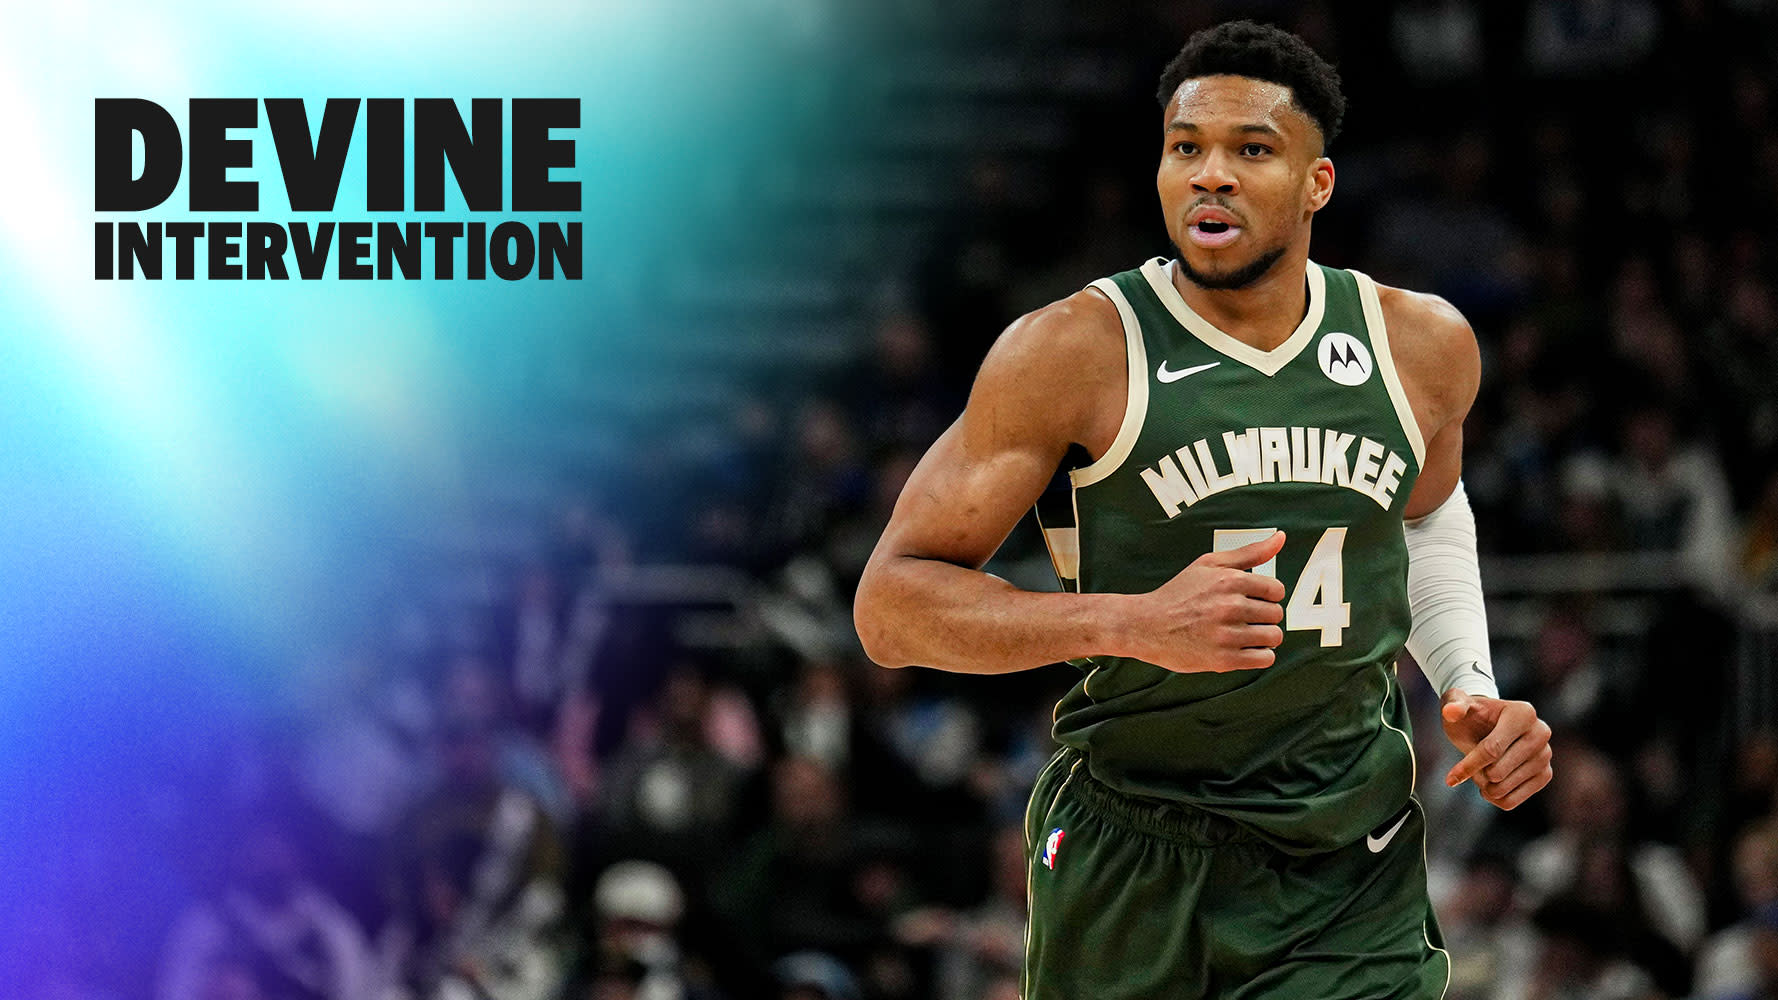 Are Giannis Antetokounmpo & the Milwaukee Bucks ready for the playoffs? | Devine Intervention